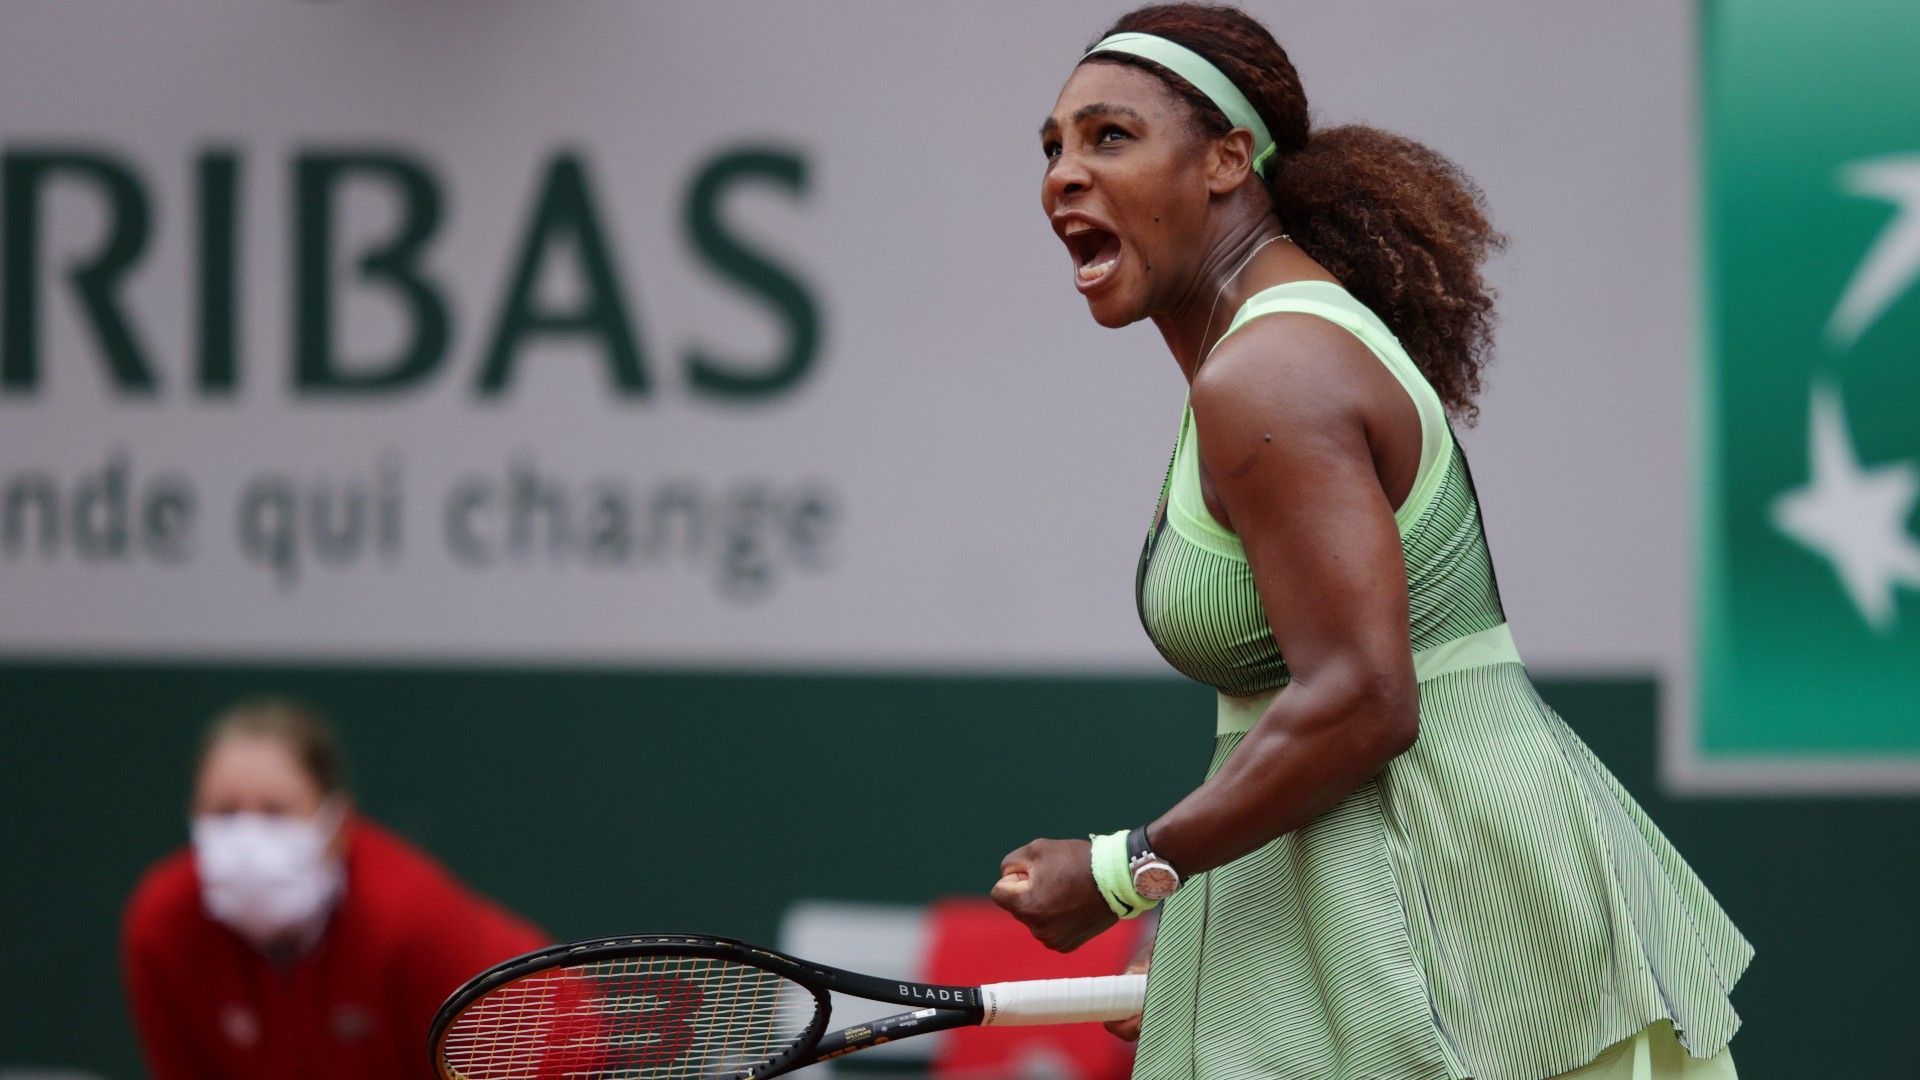 Roland Garros 2021: Serena Williams beats Danielle Collins